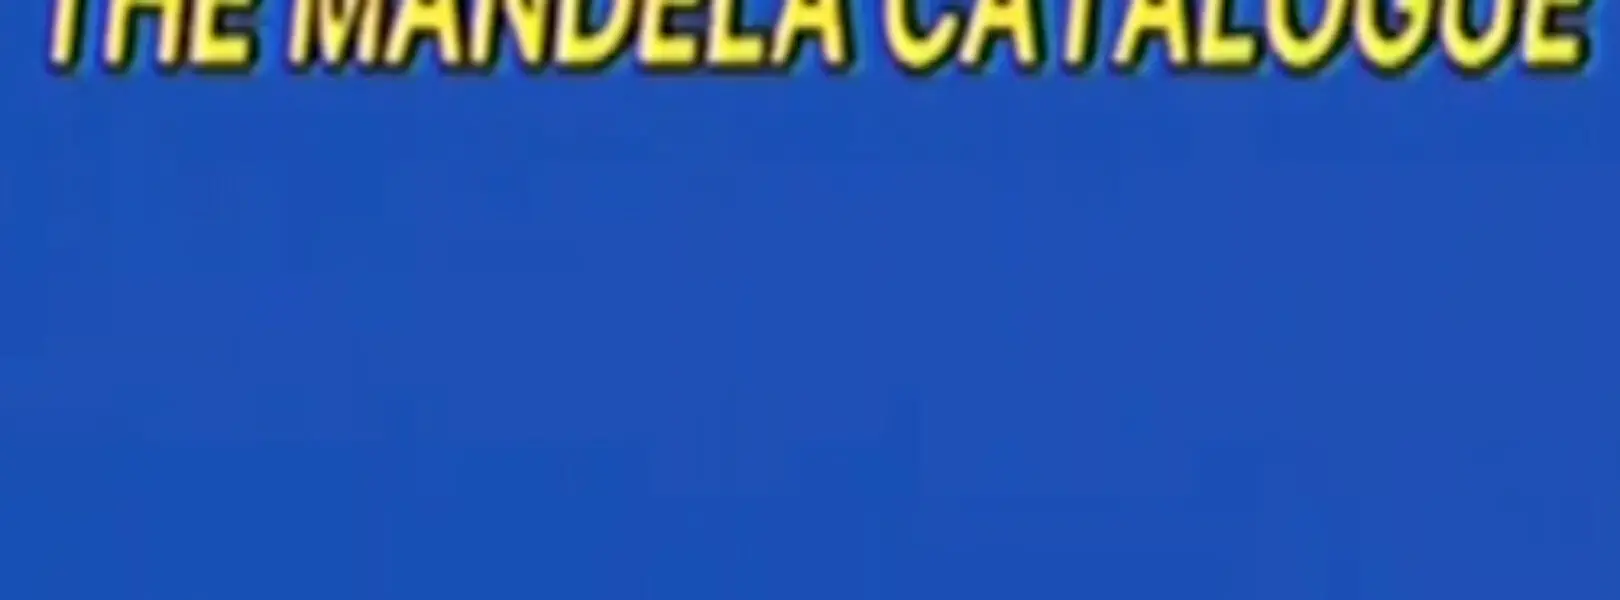 The Mandela Catalogue Official Series Trailer 